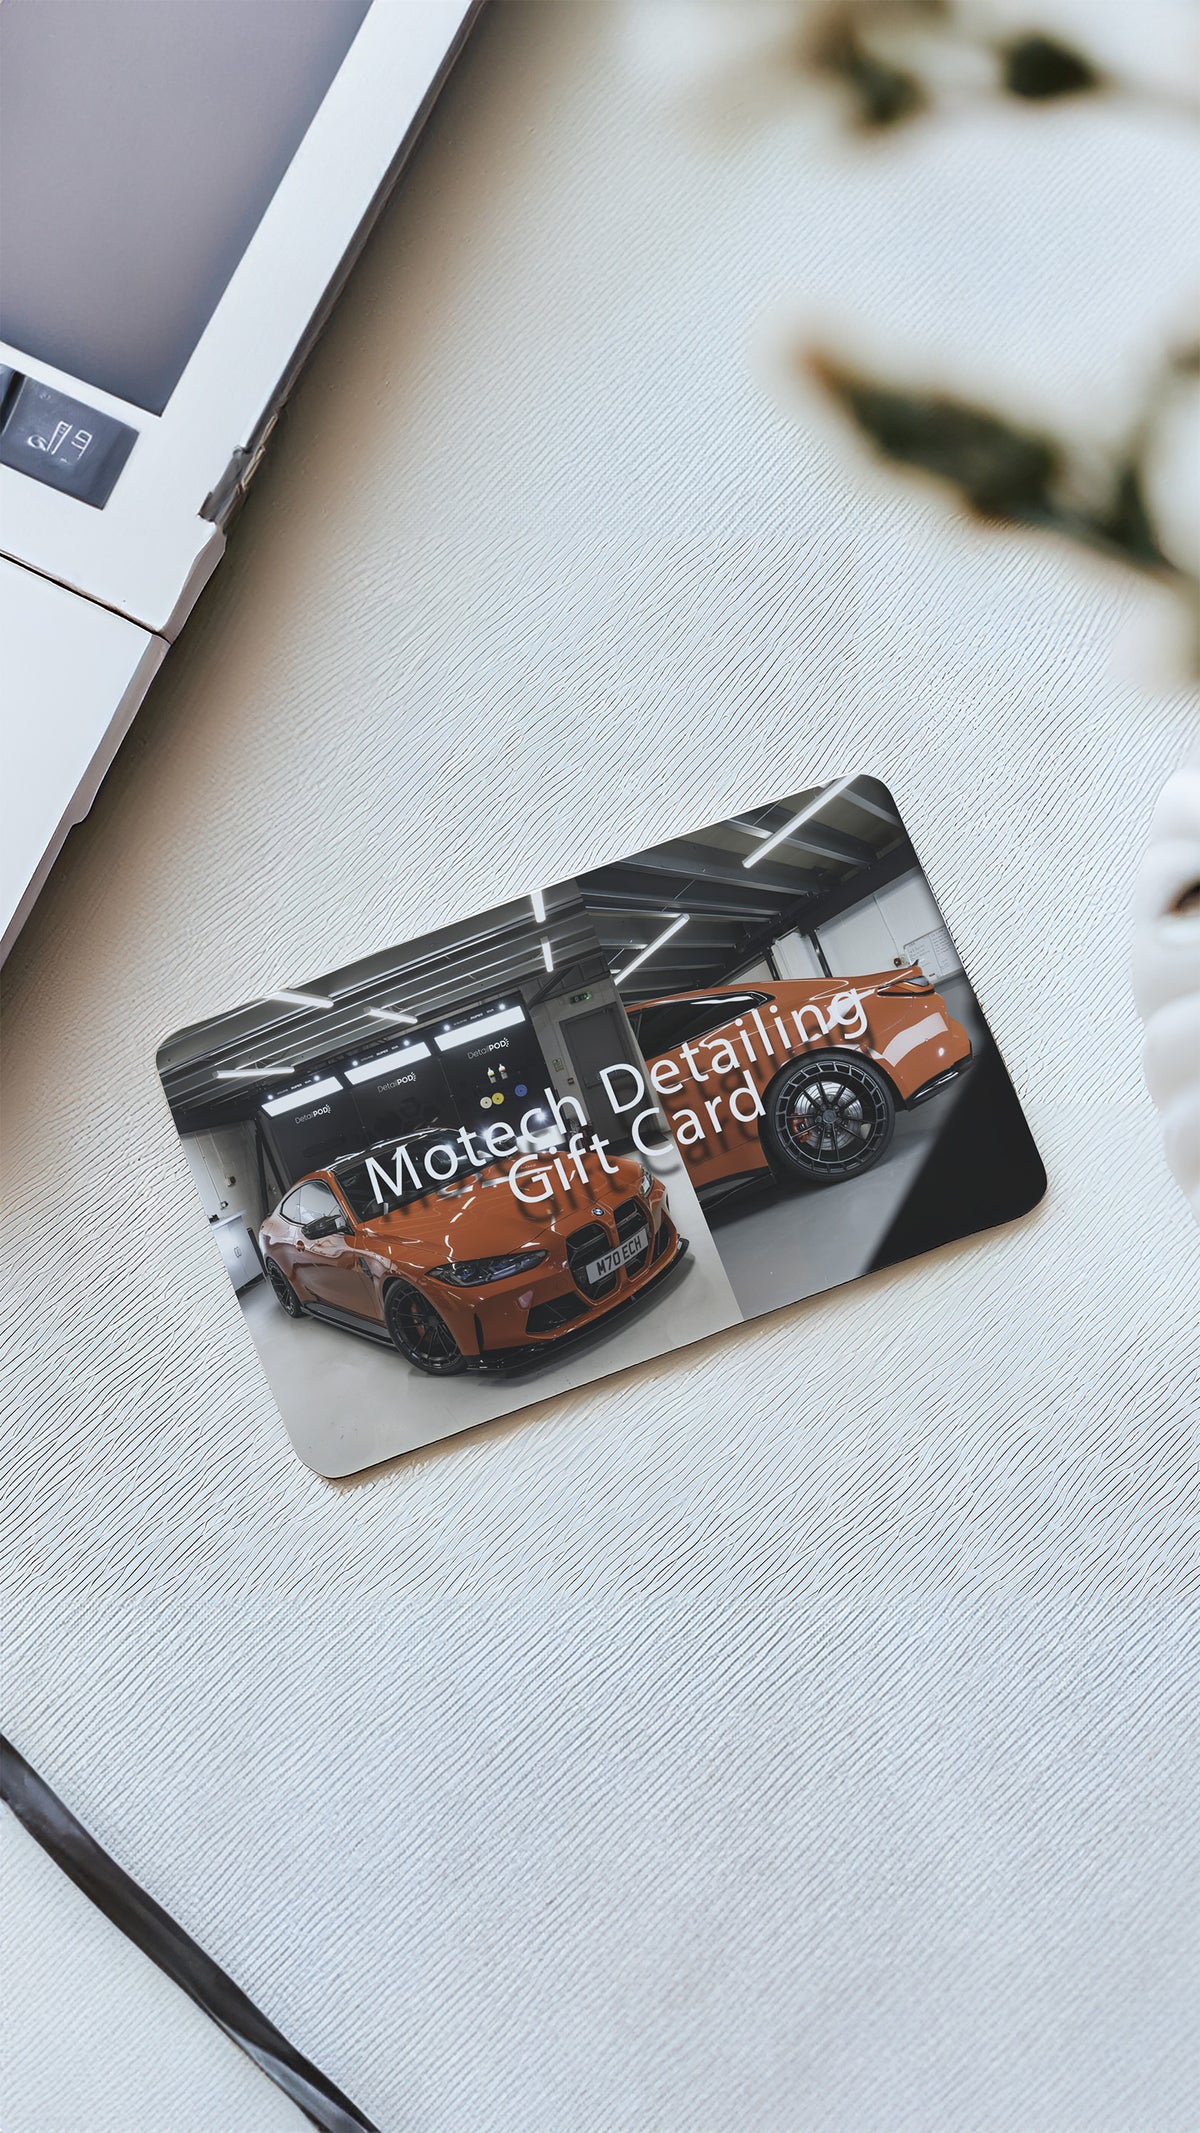 Motech Detailing Gift Card